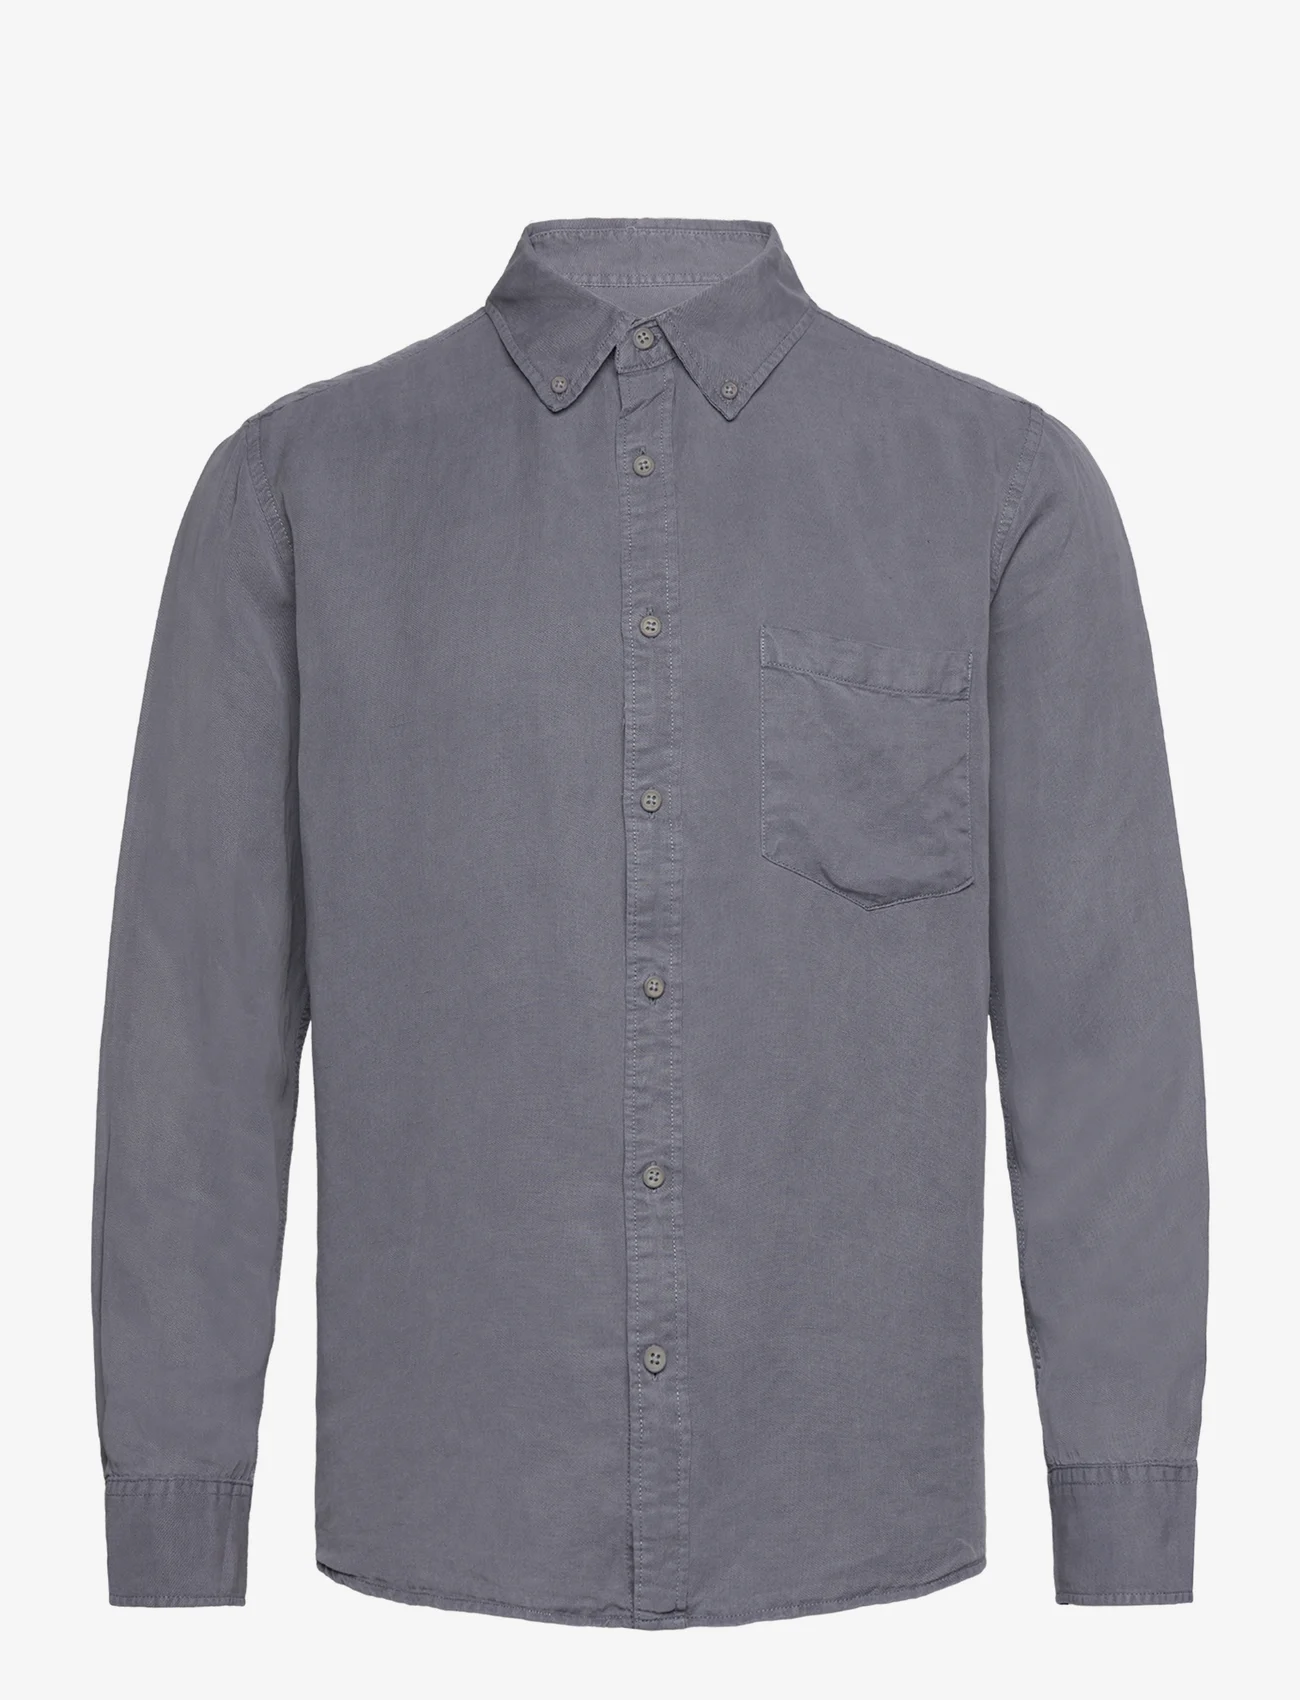 NEUW - CURTIS TENCEL LS SHIRT STEEL BLUE - basic skjortor - blue - 0